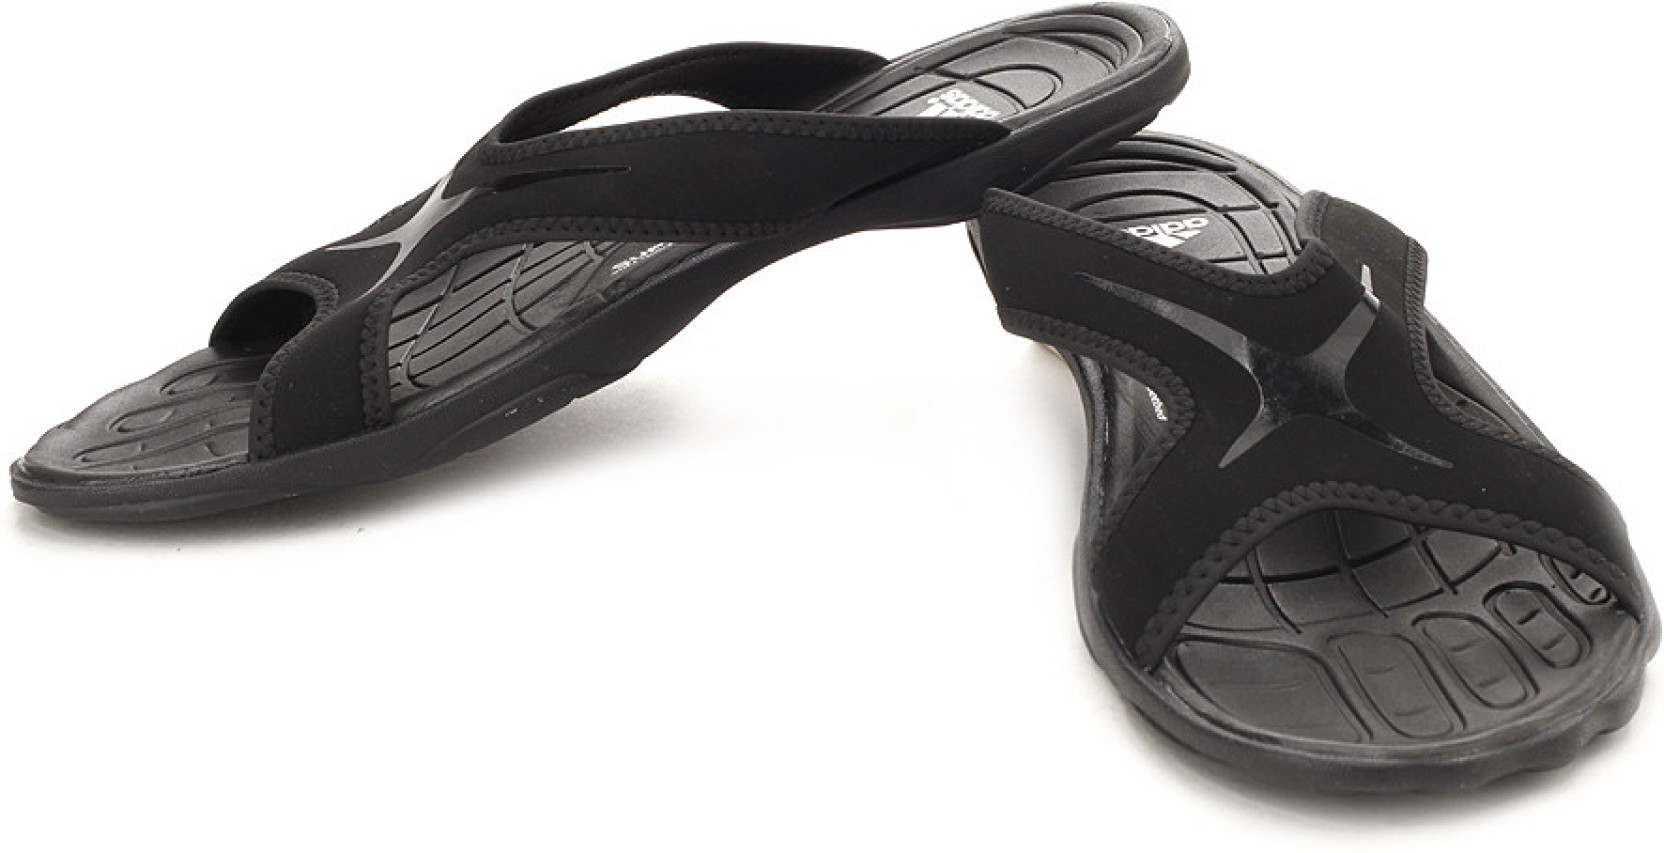 Adidas Adipure Slide SC Slippers - Buy Black Color Adidas Adipure Slide ...